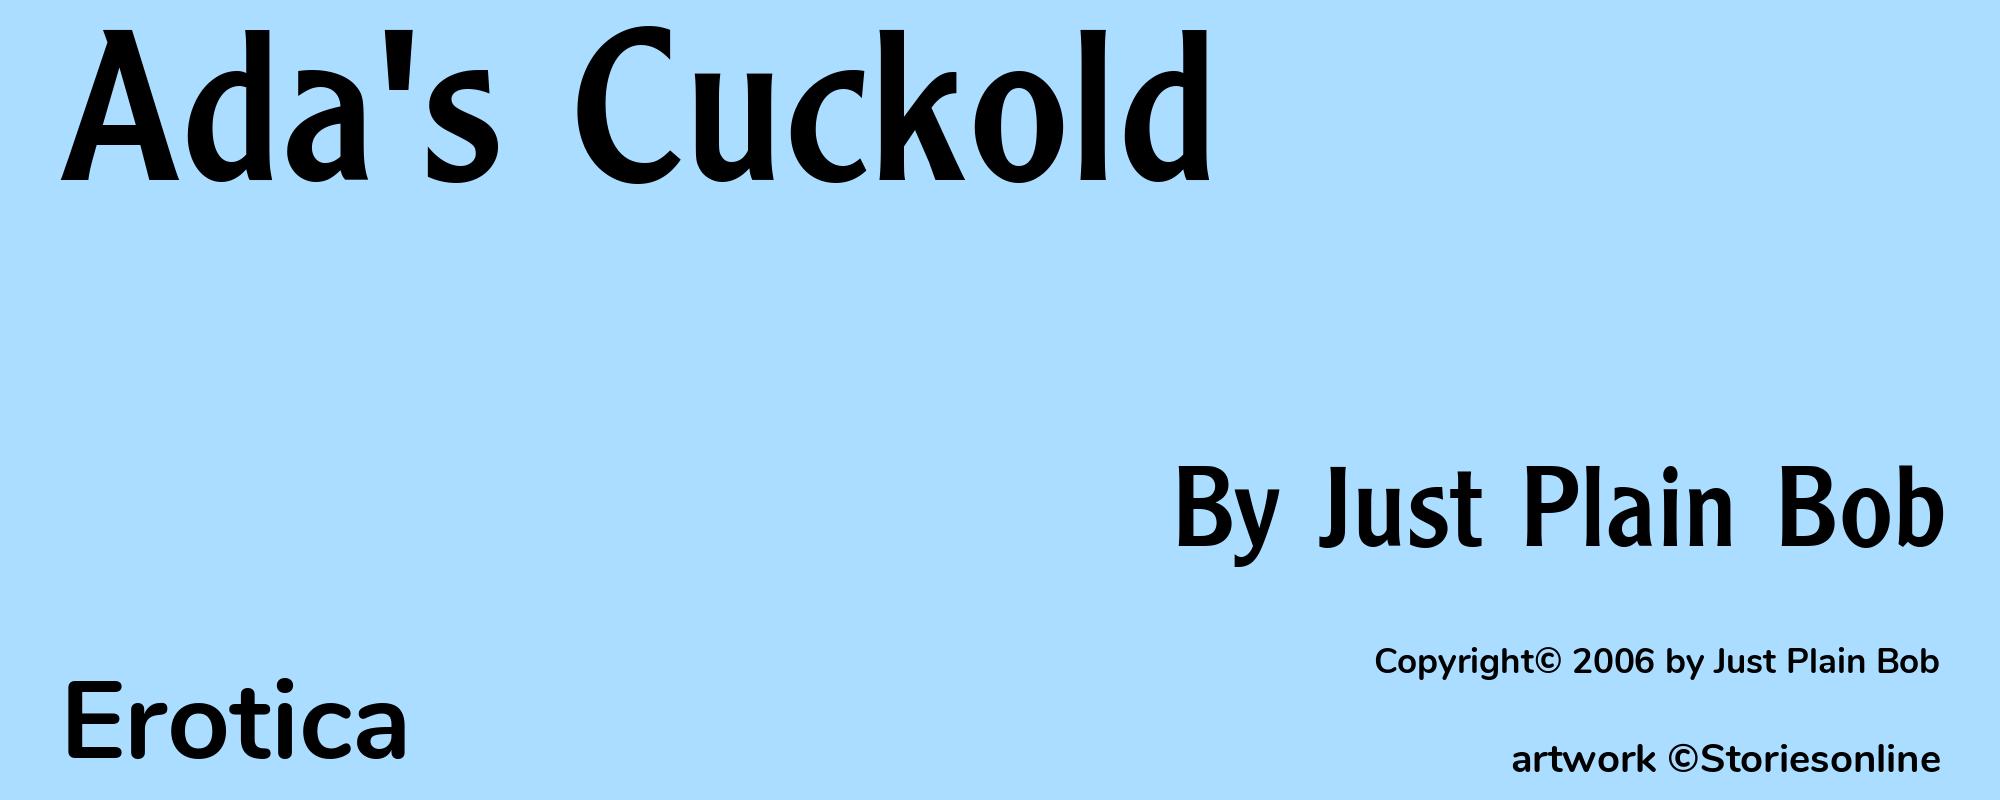 Ada's Cuckold - Cover